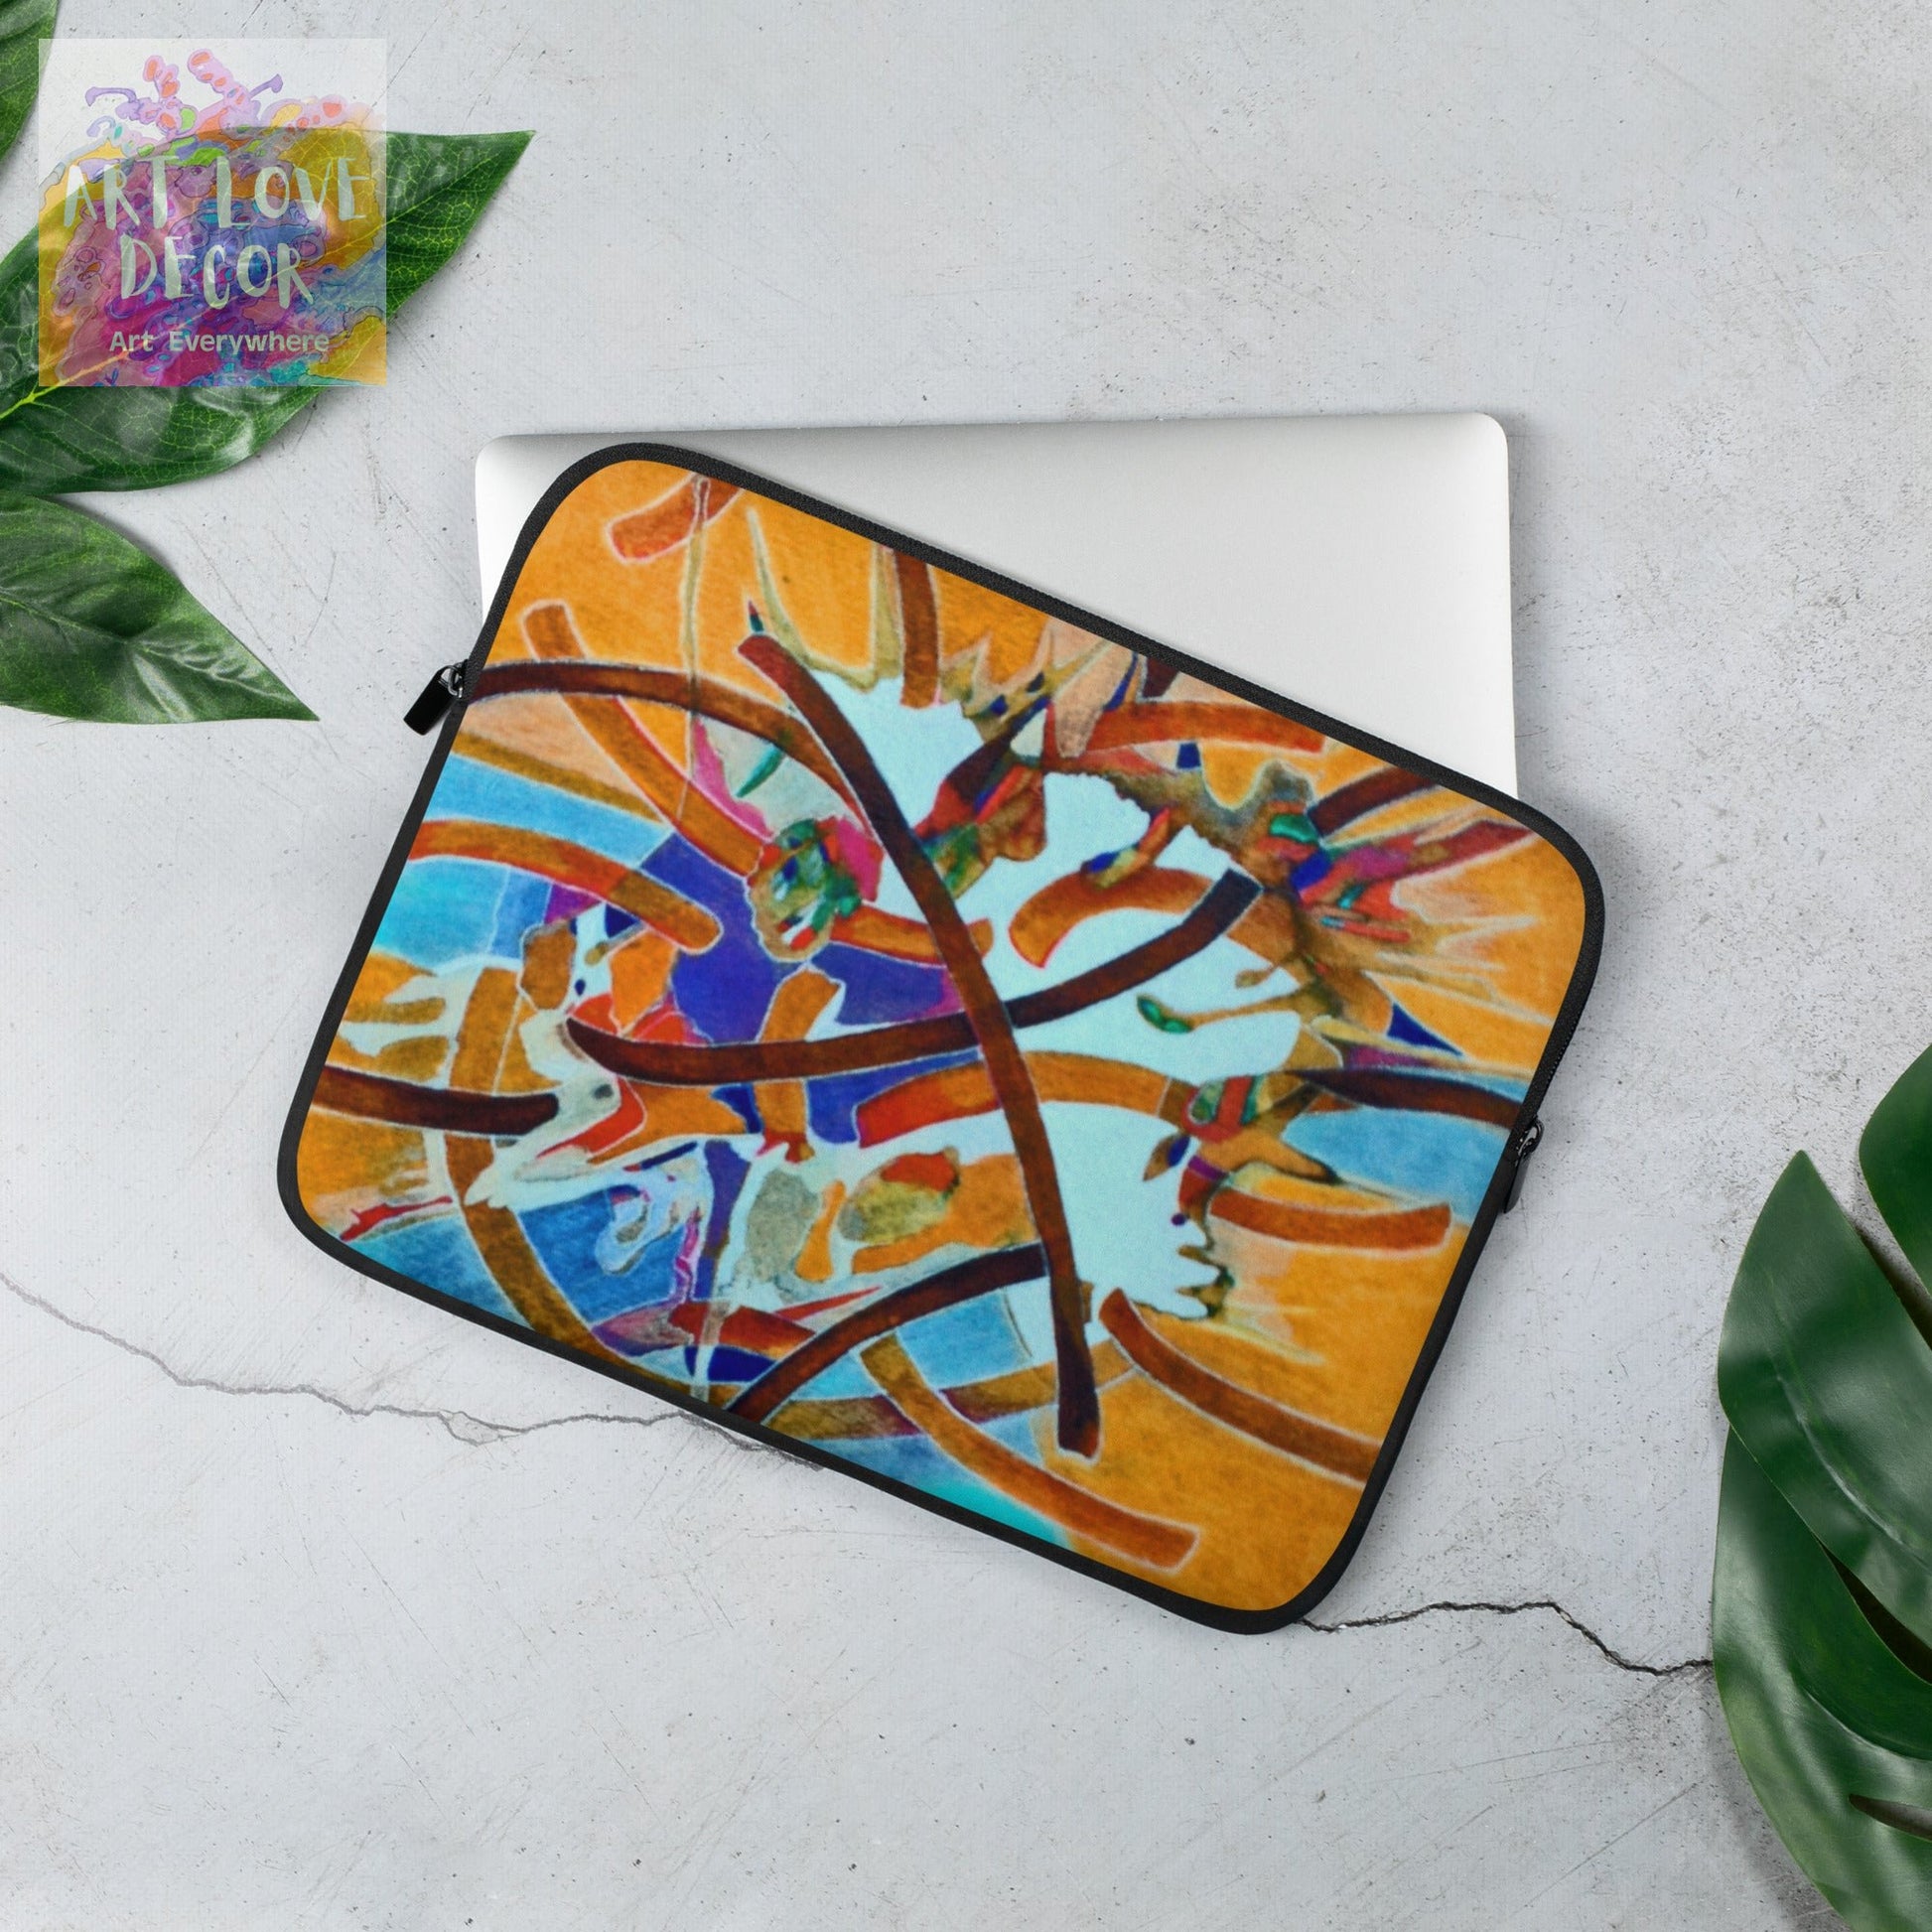 Unexpected Abstract Laptop Sleeve - Art Love Decor